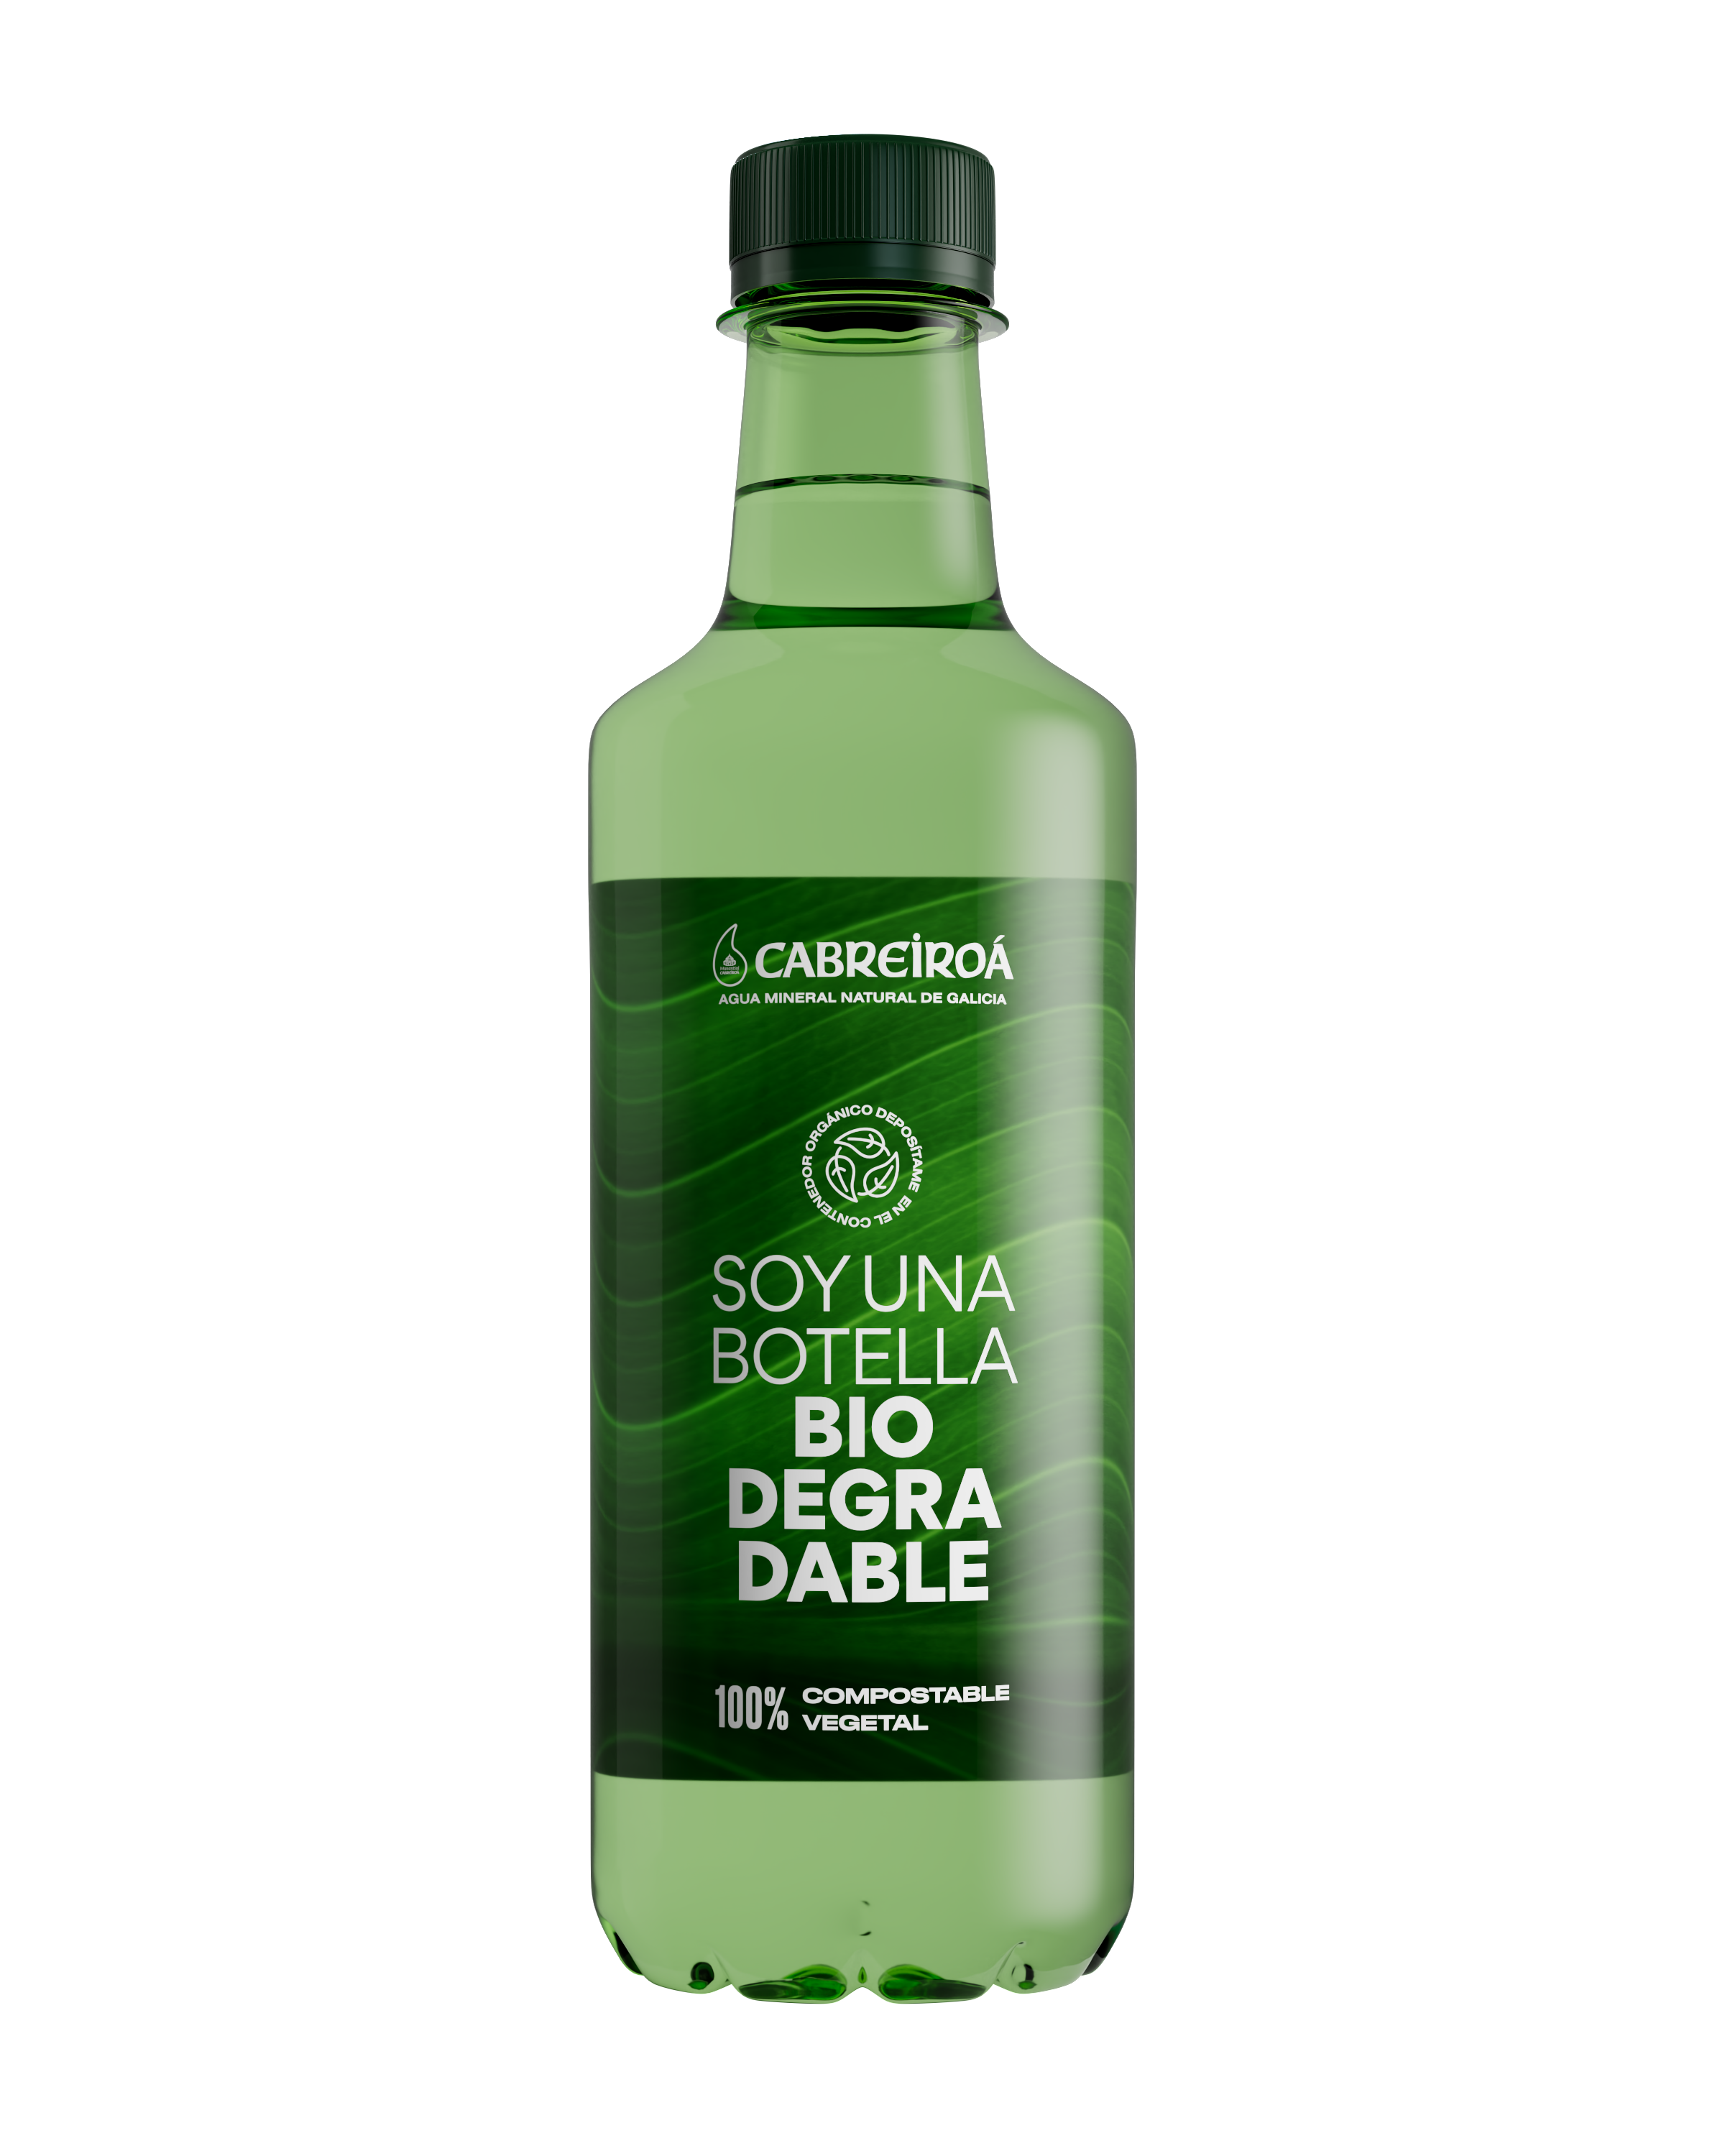 Nueva botella de Agua Cabreiroá 100% biodegradable.